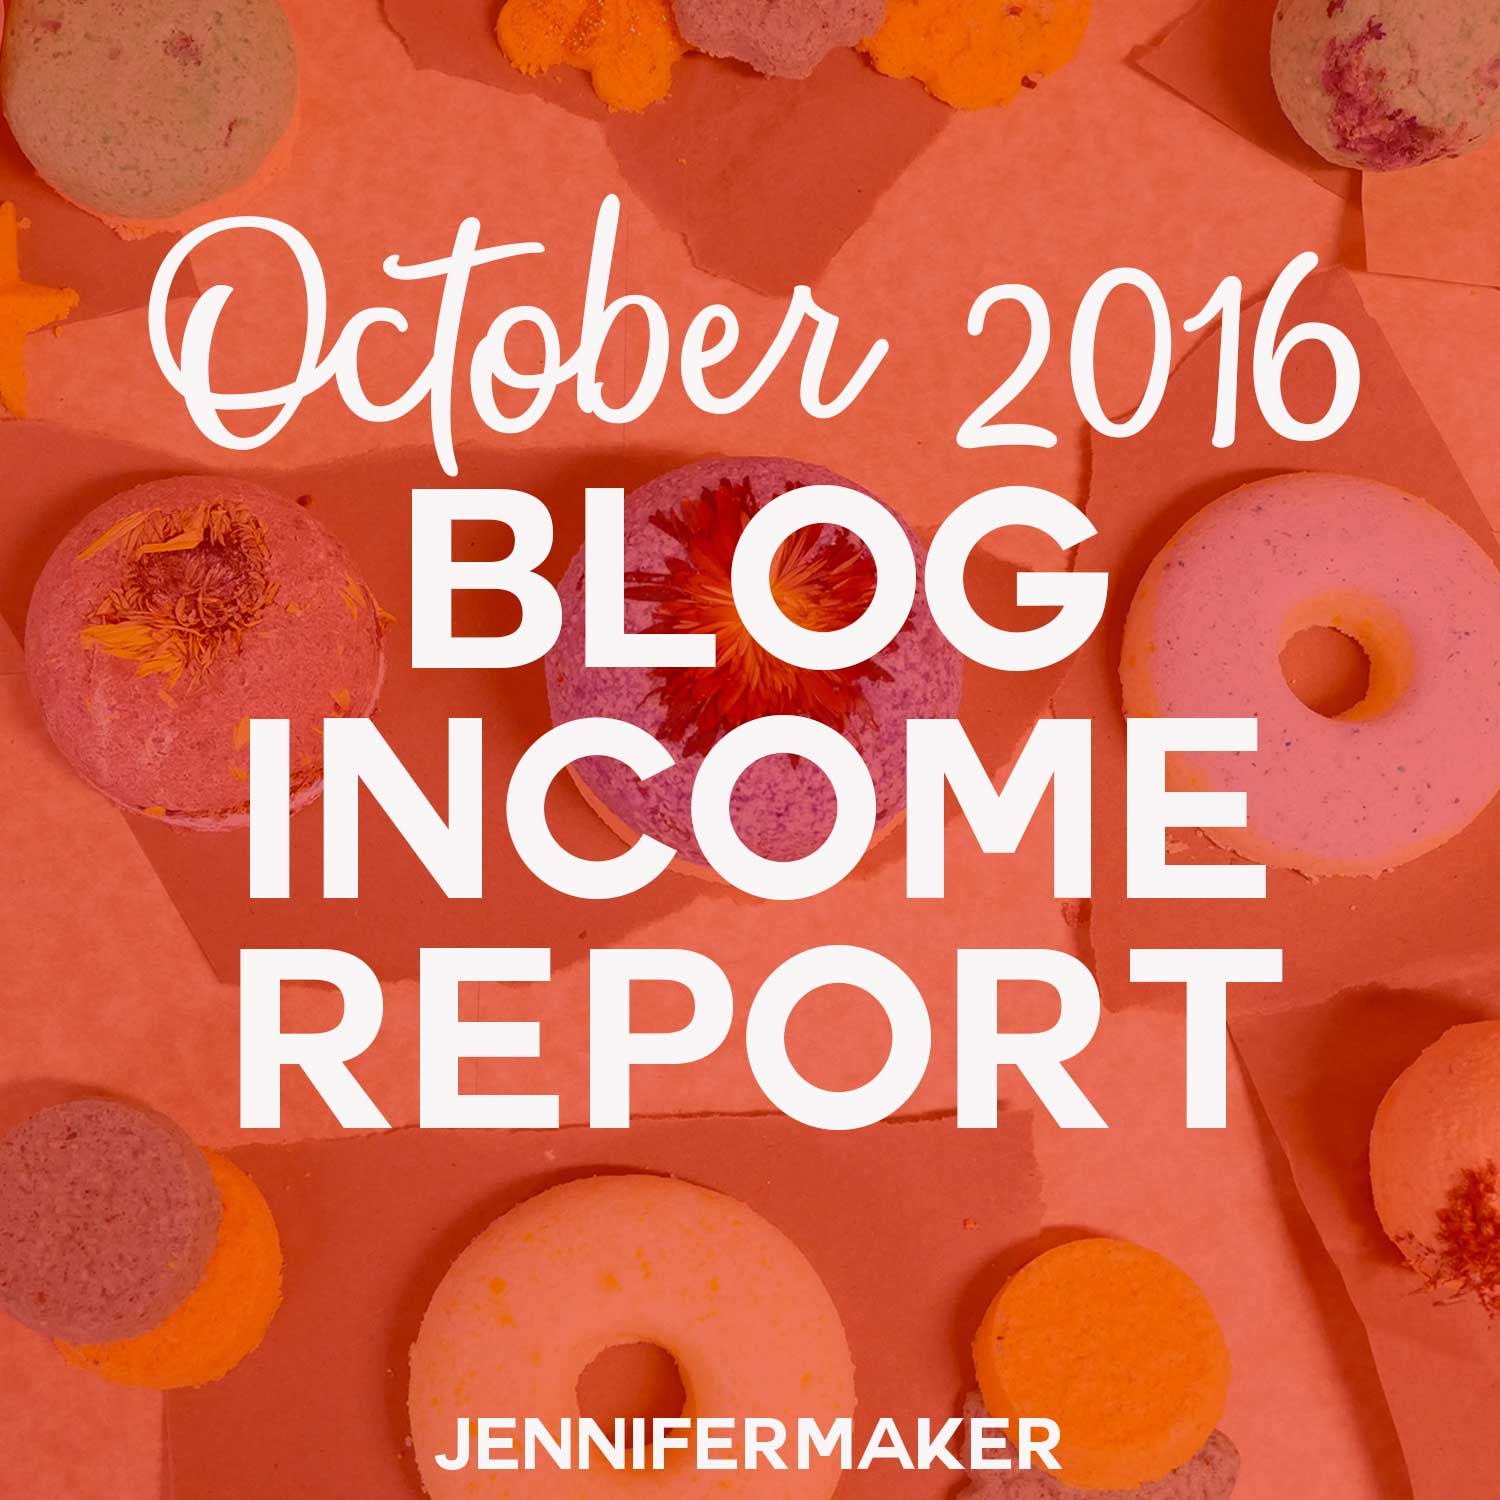 Blog Income Report for October 2016 #blogging #incomereport